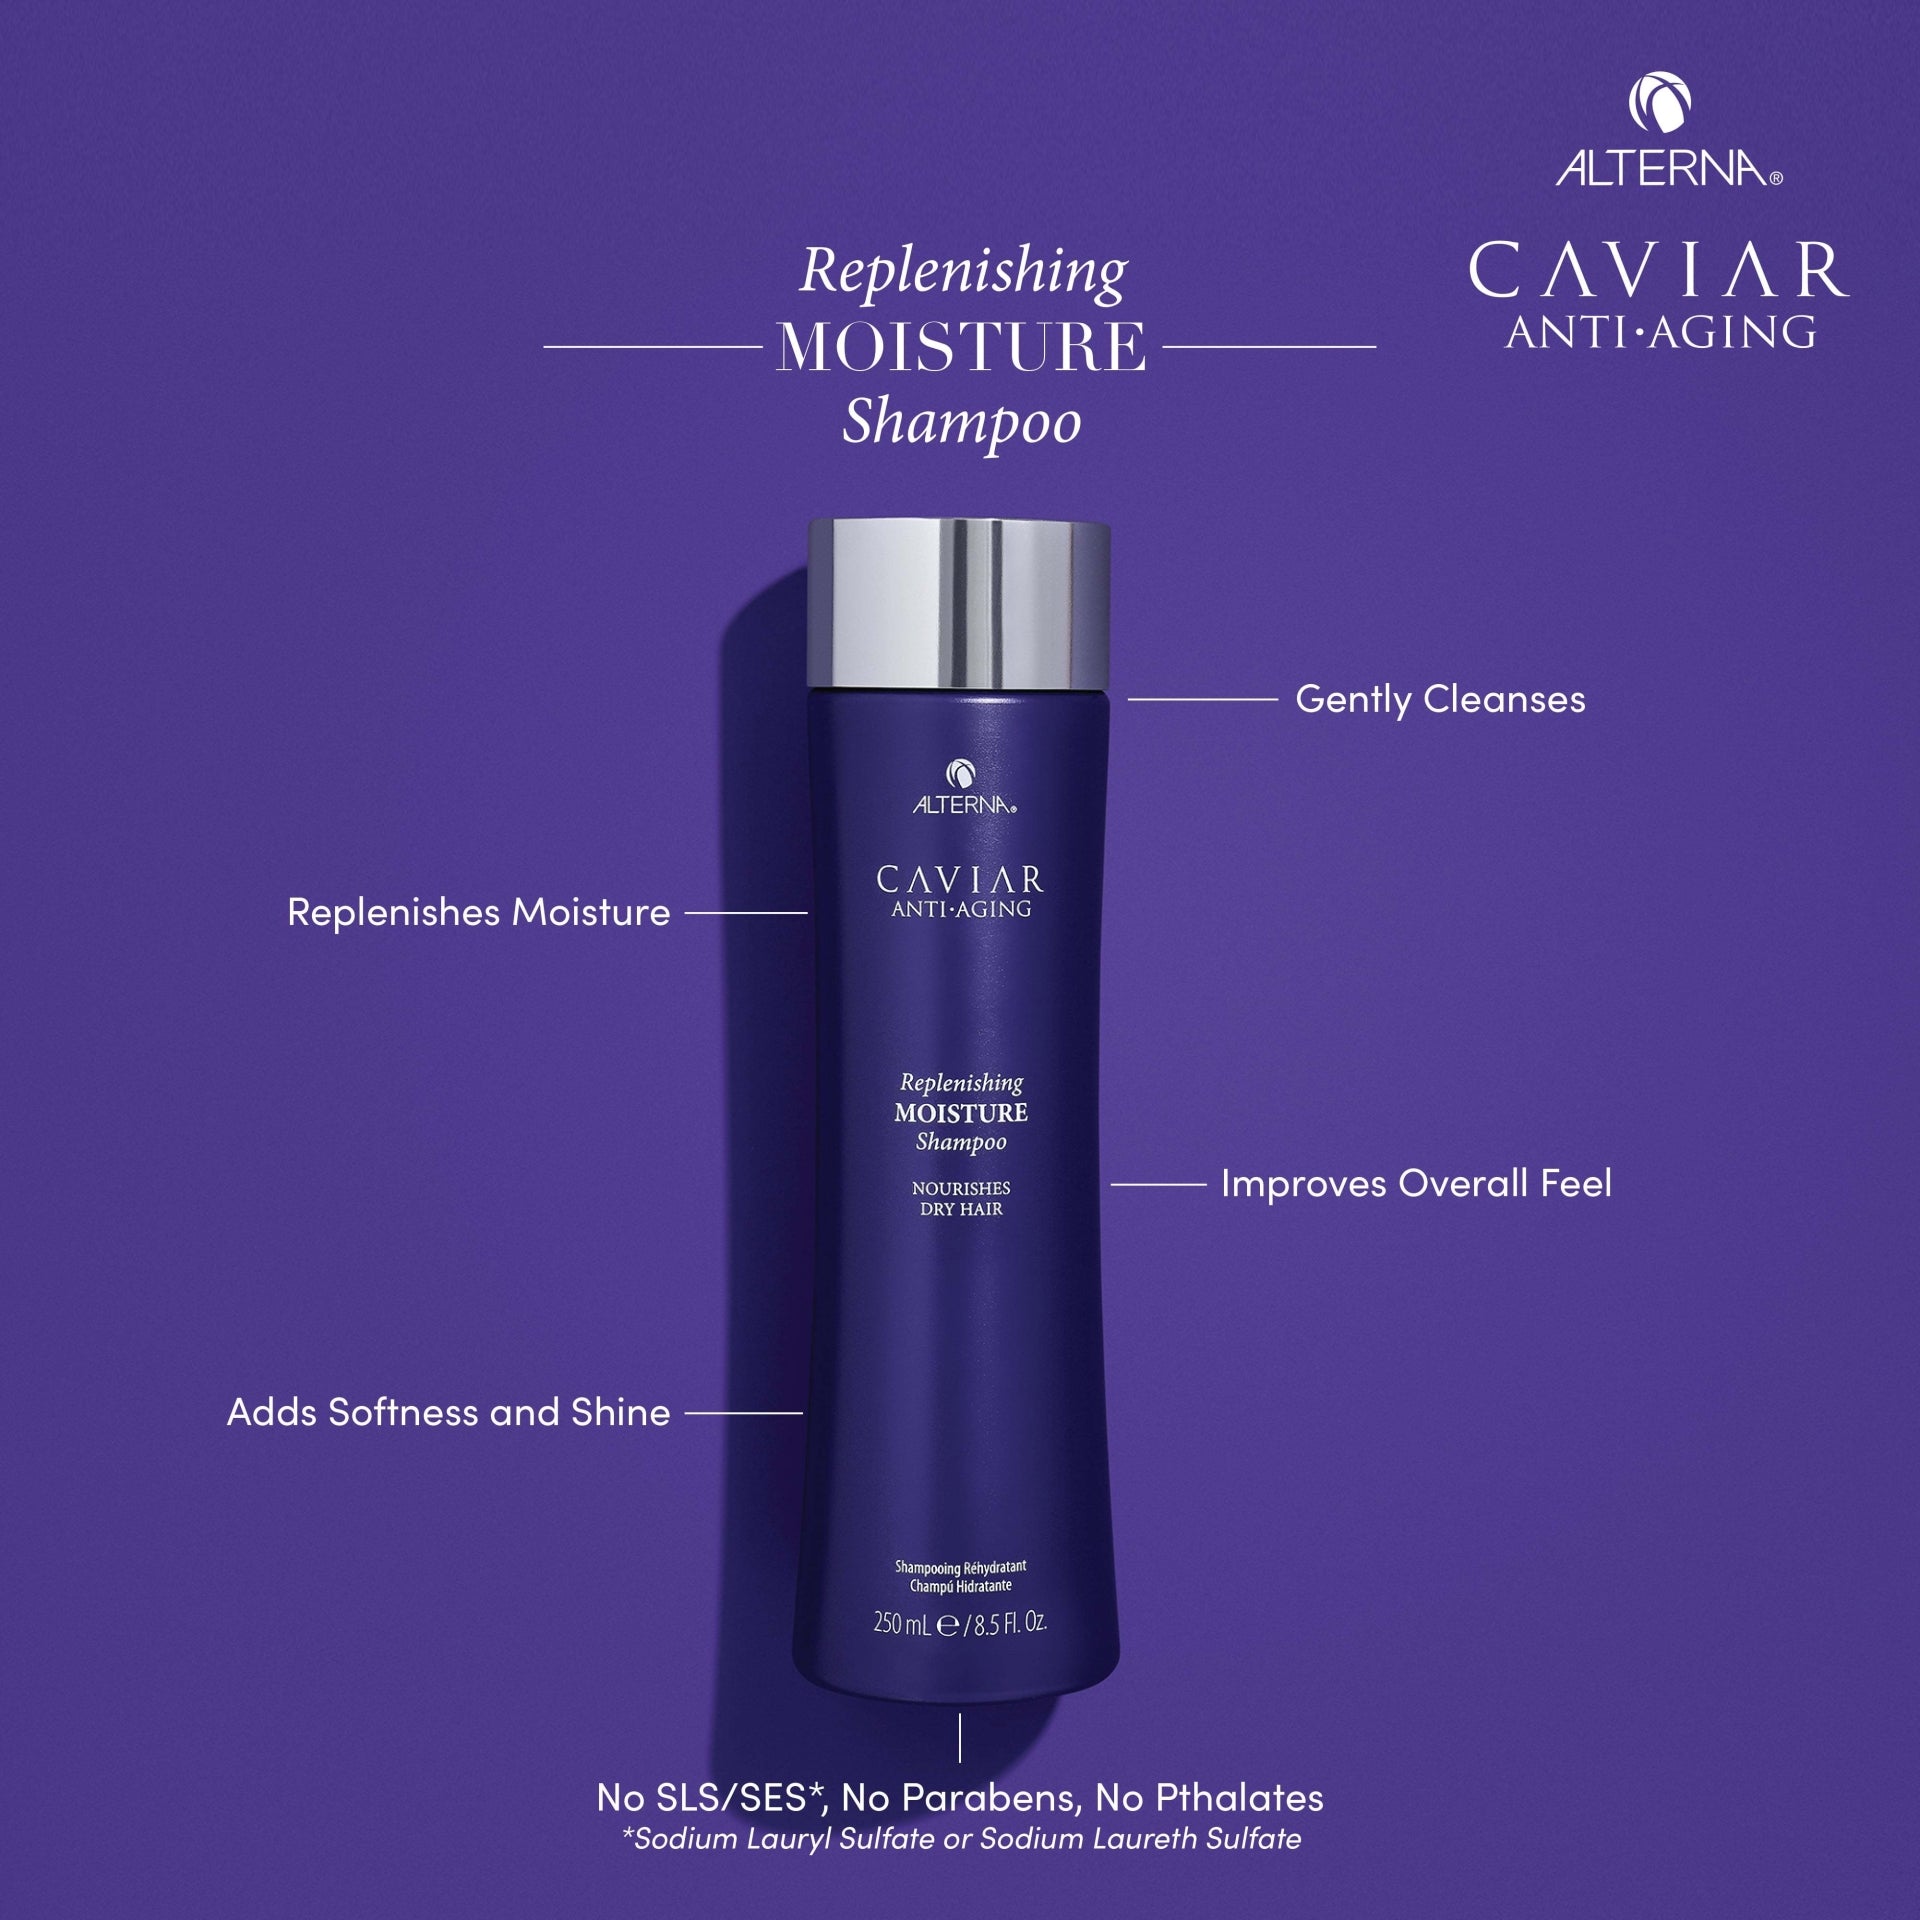 alterna caviar anti aging replenishing moisture shampoo benefit